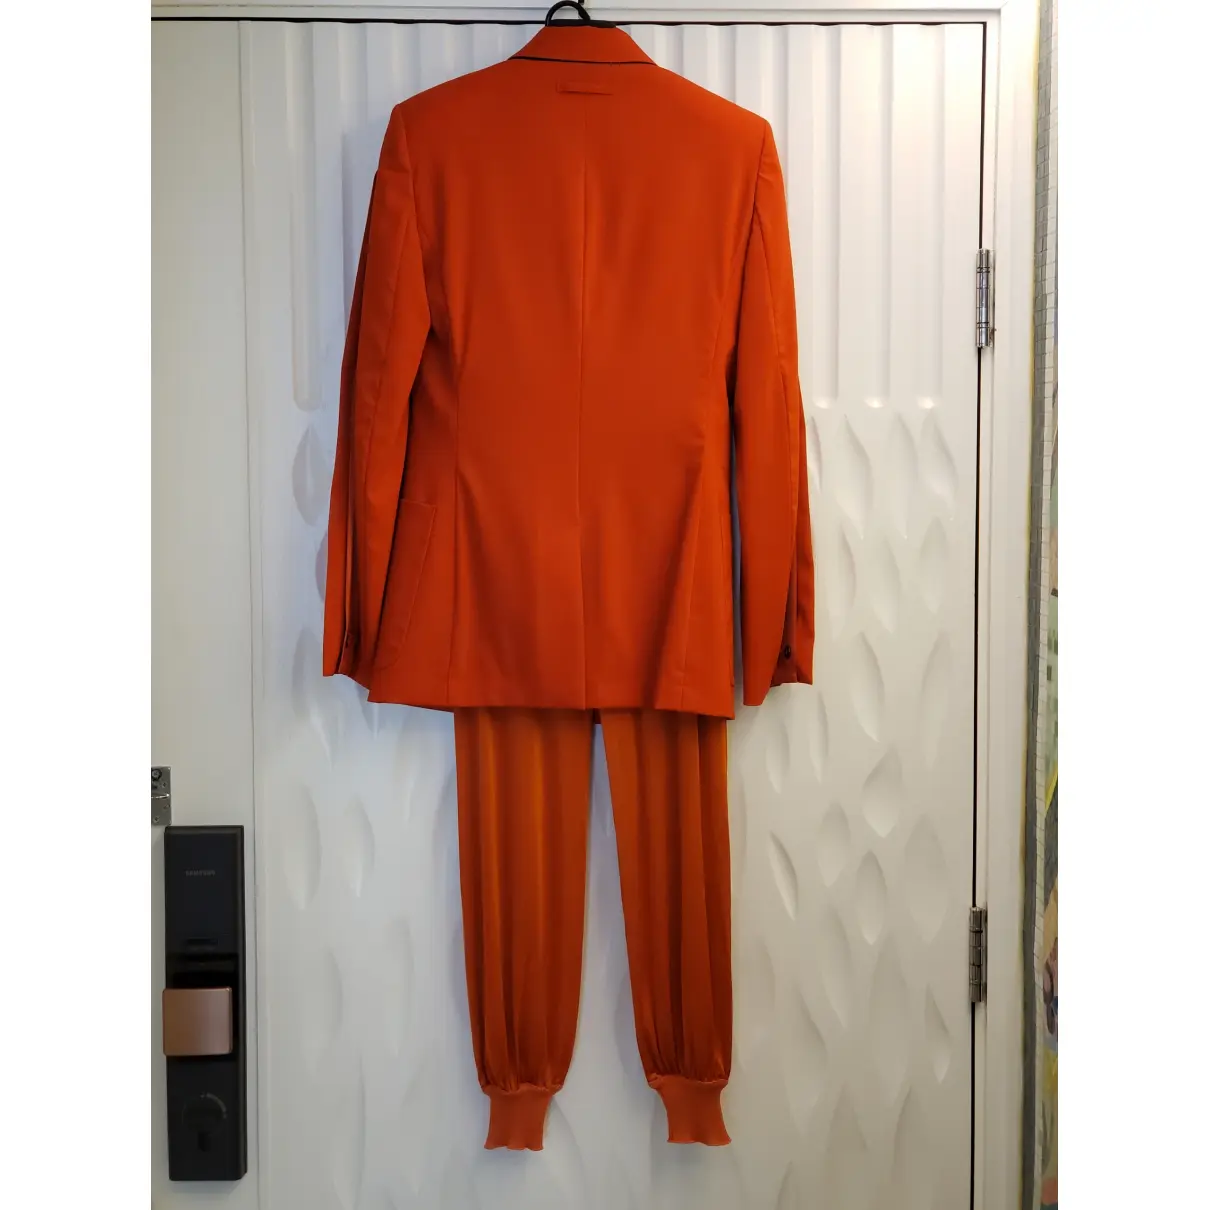 Buy Jean Paul Gaultier Wool suit jacket online